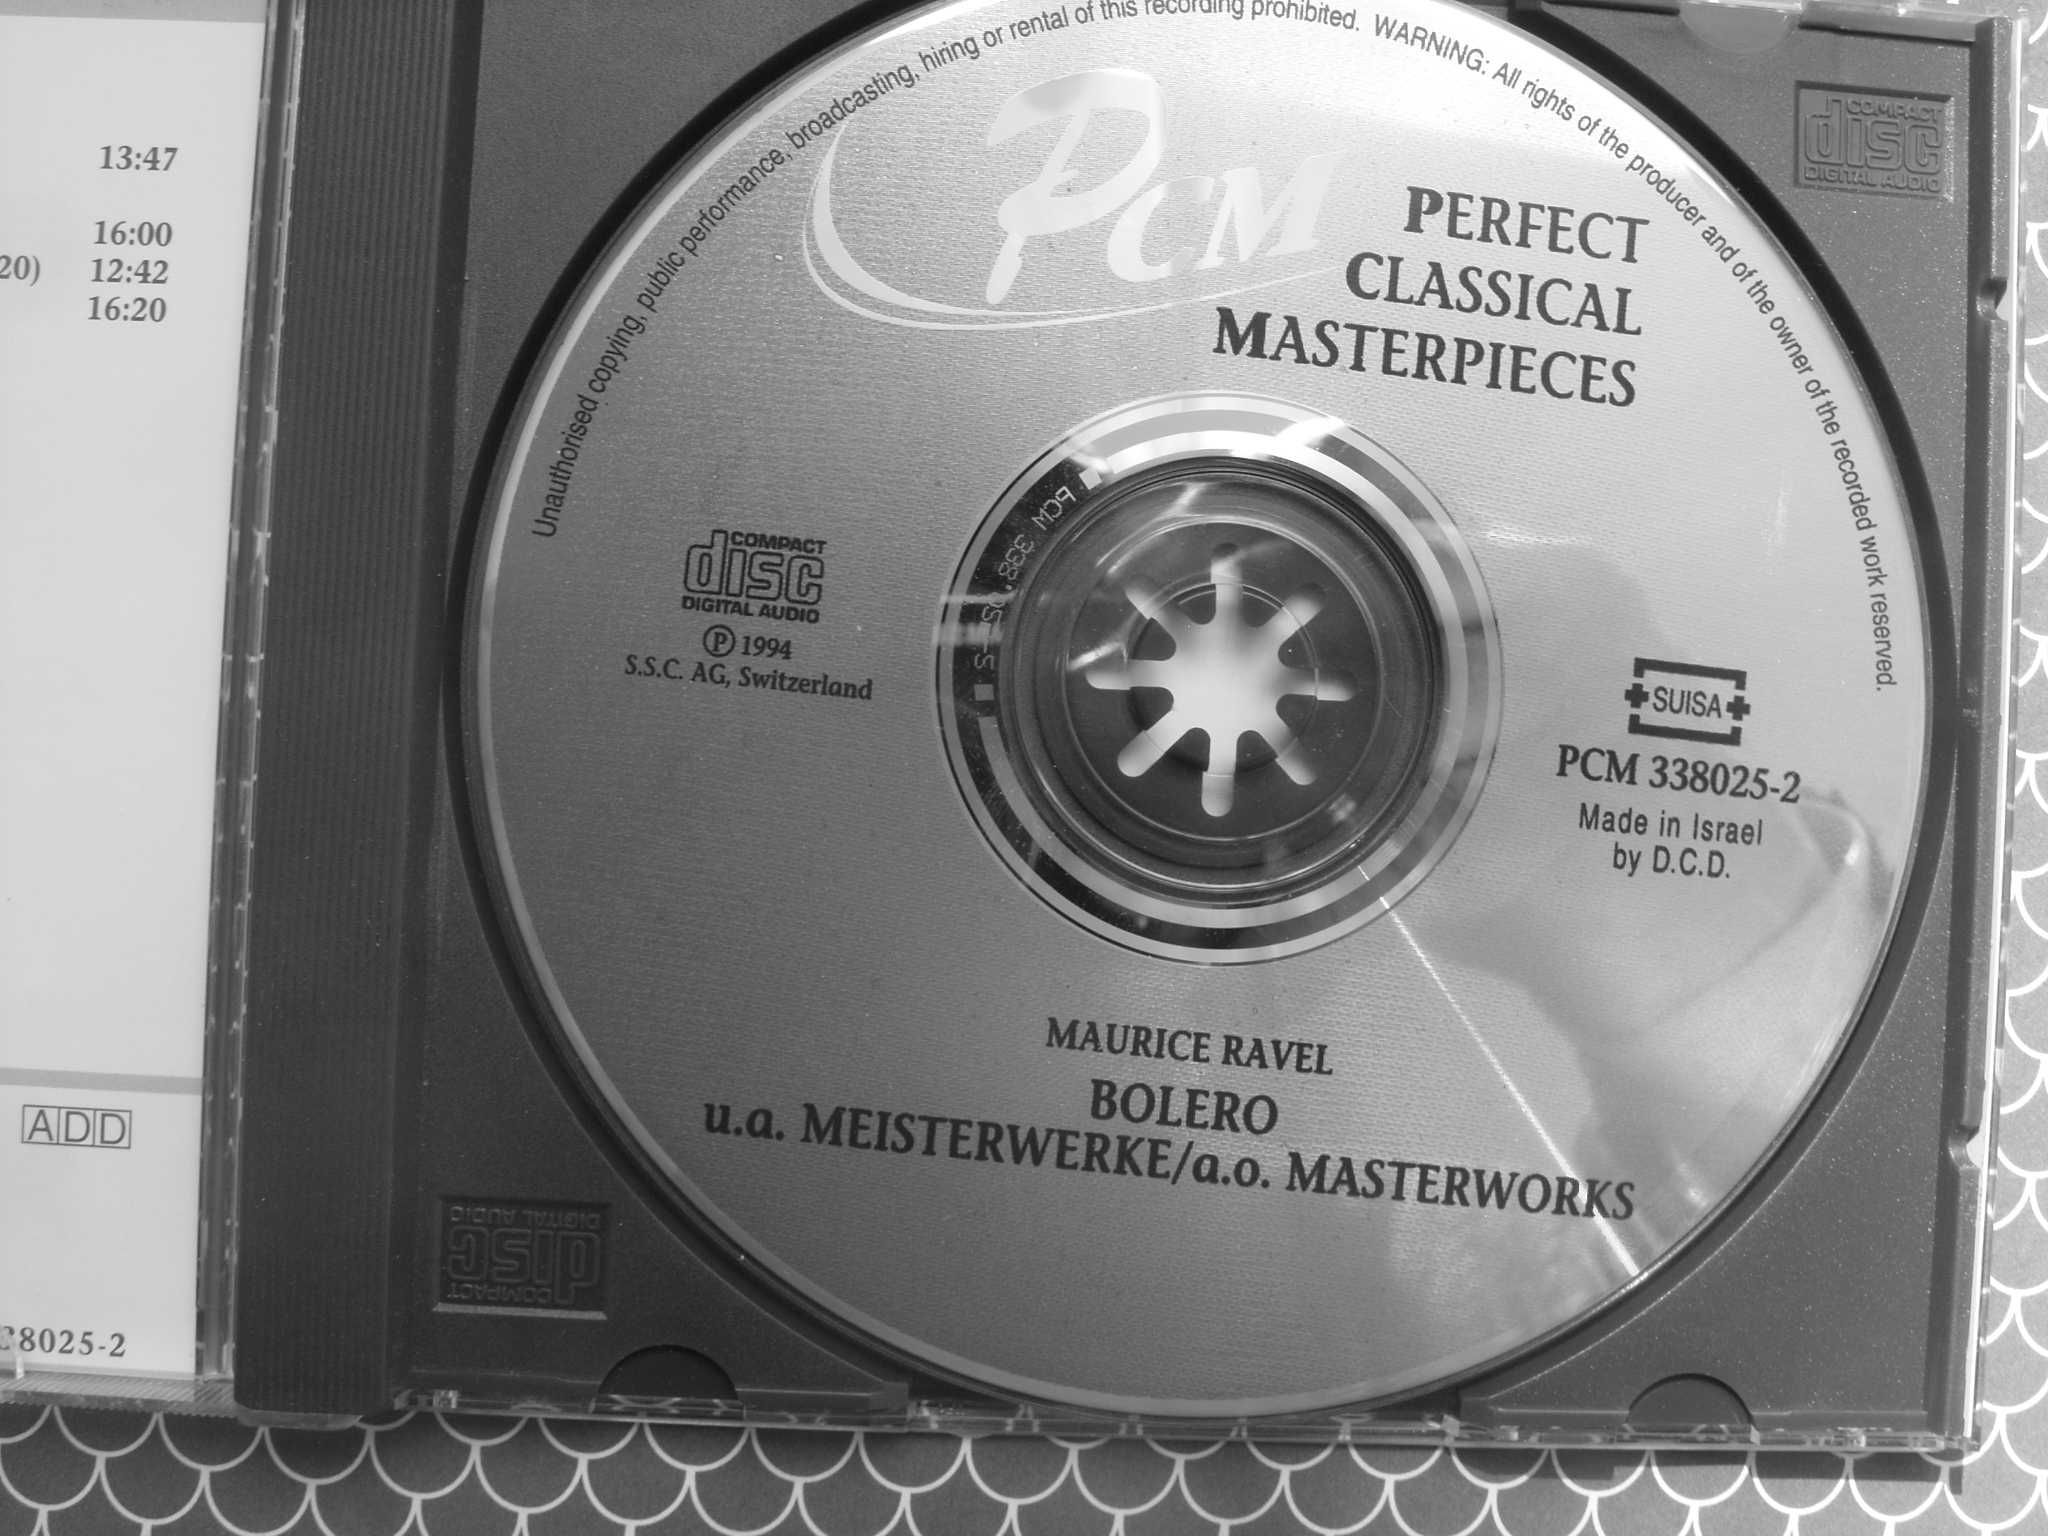 Plyta cd; MAUFICE RAVEI--BOLERO, 1994 rok.